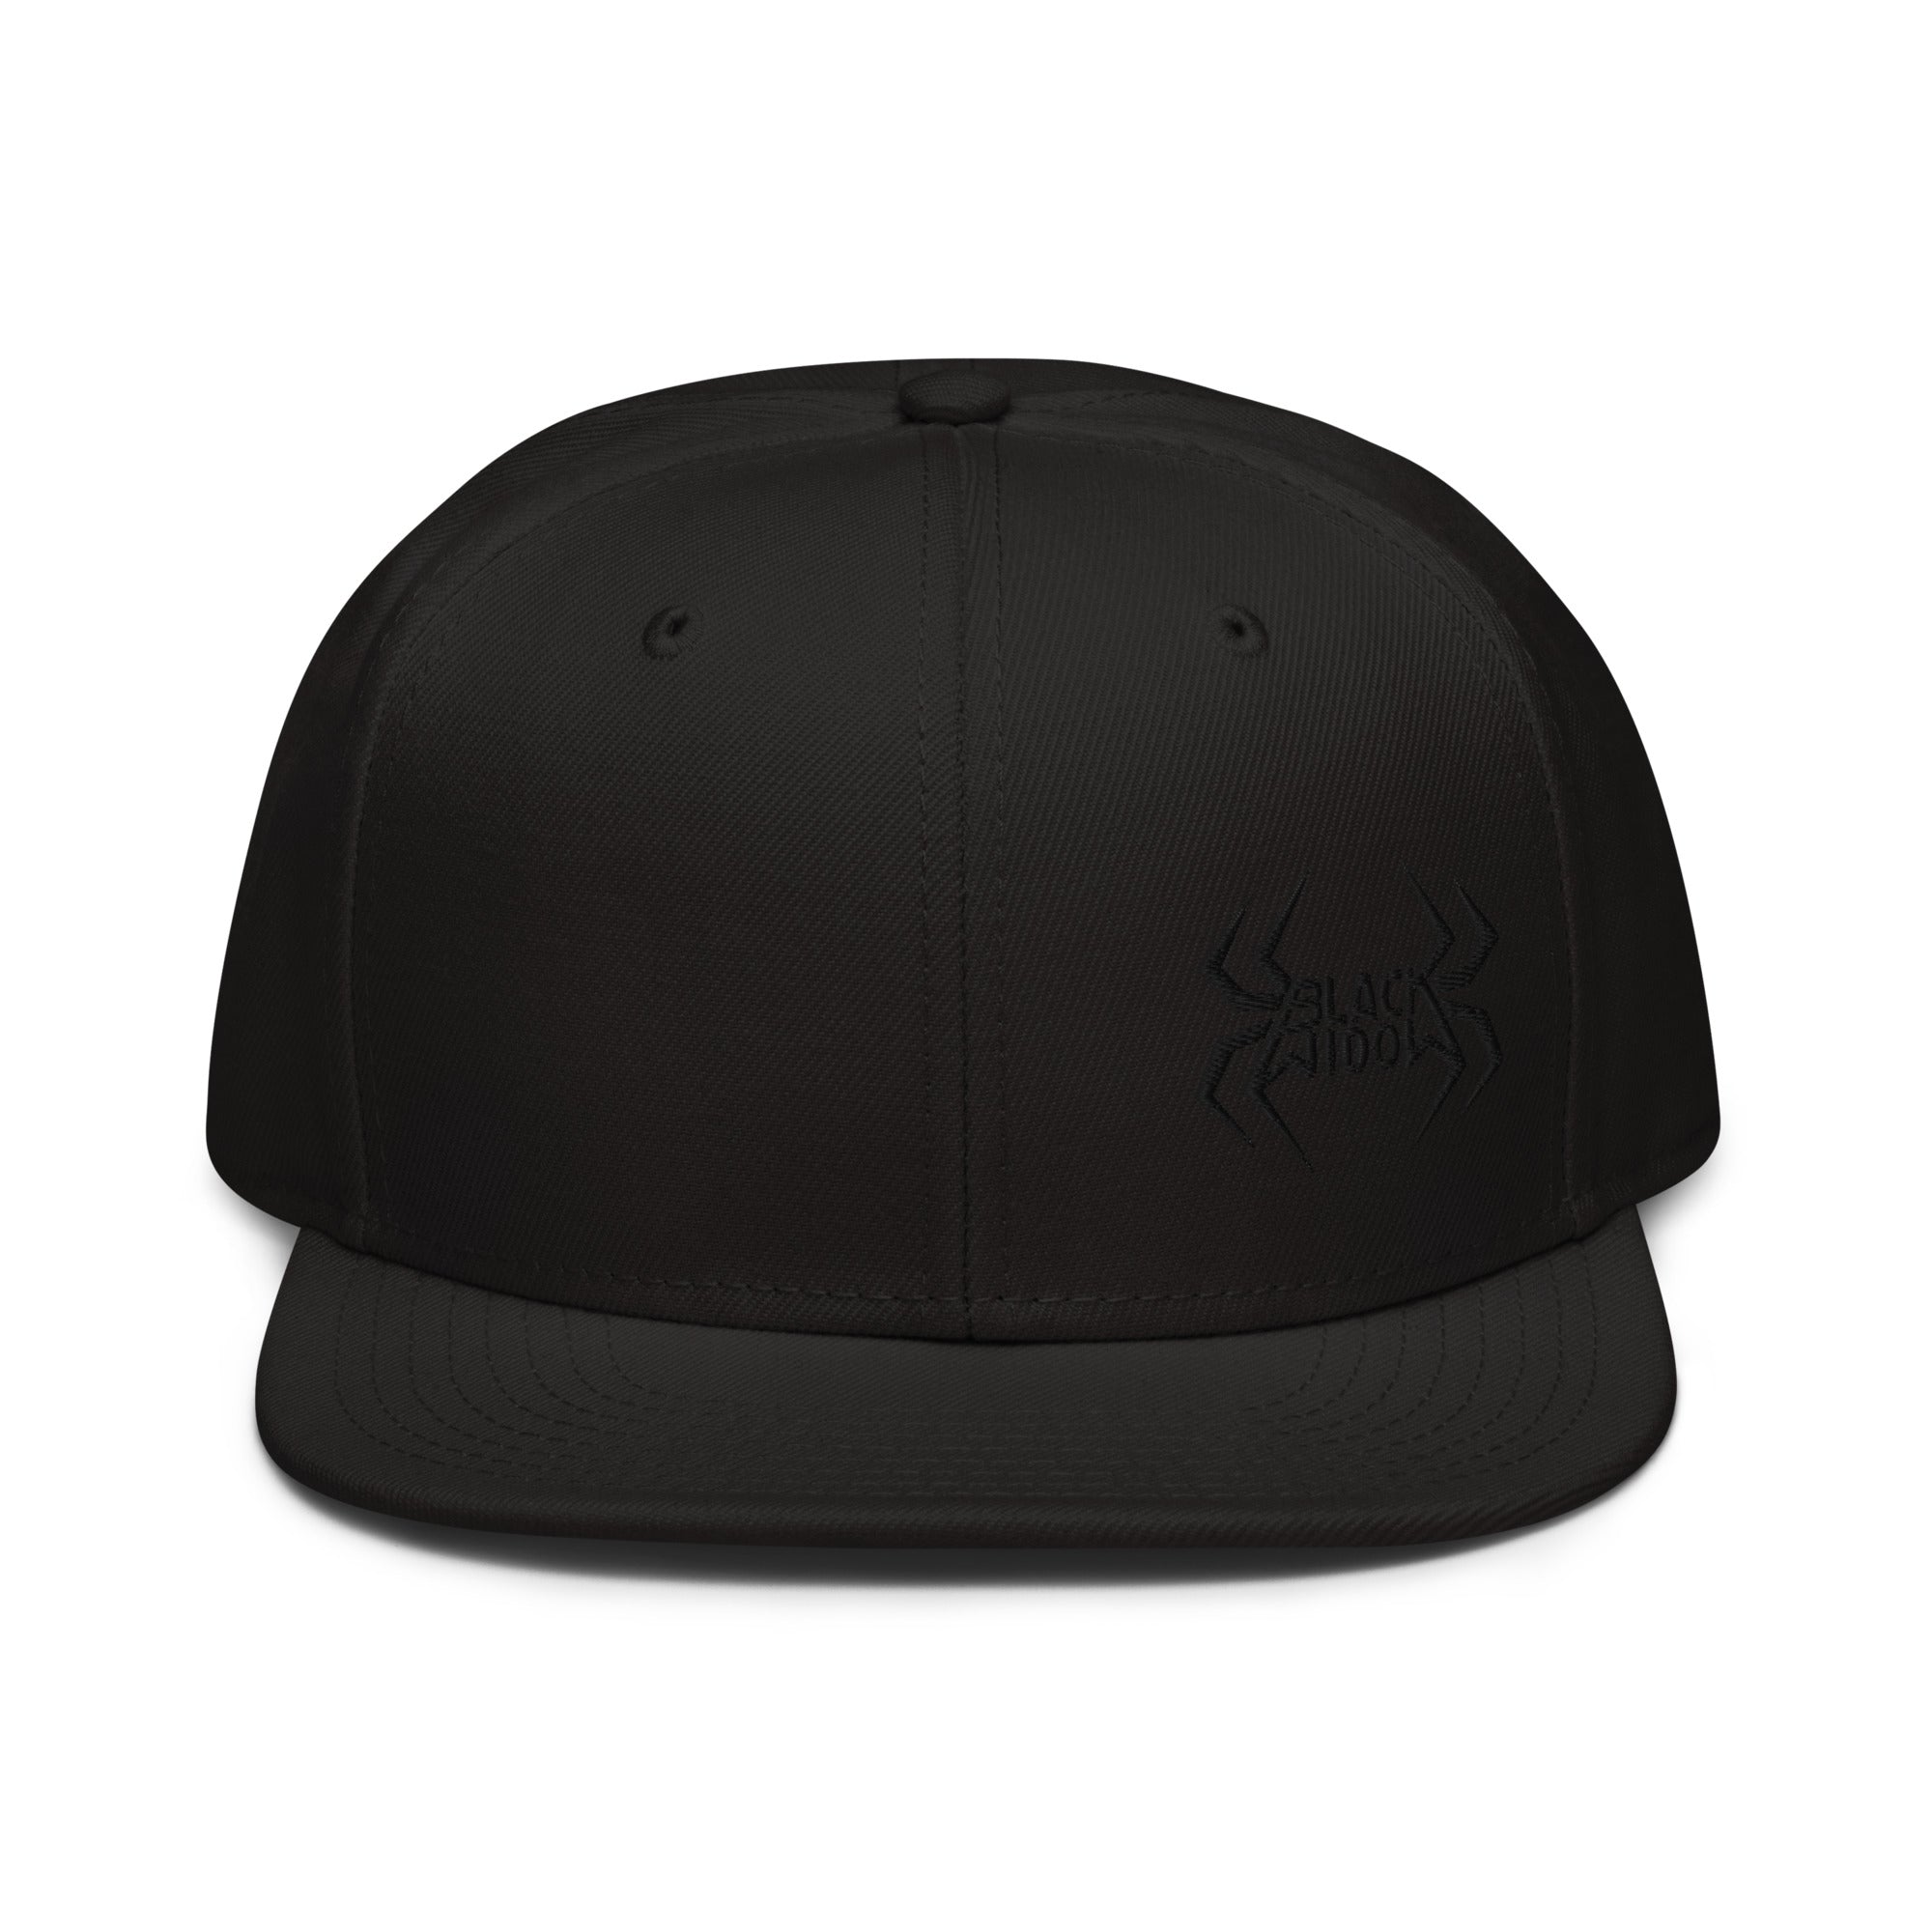 BW Snapback Hat (Black on Black)